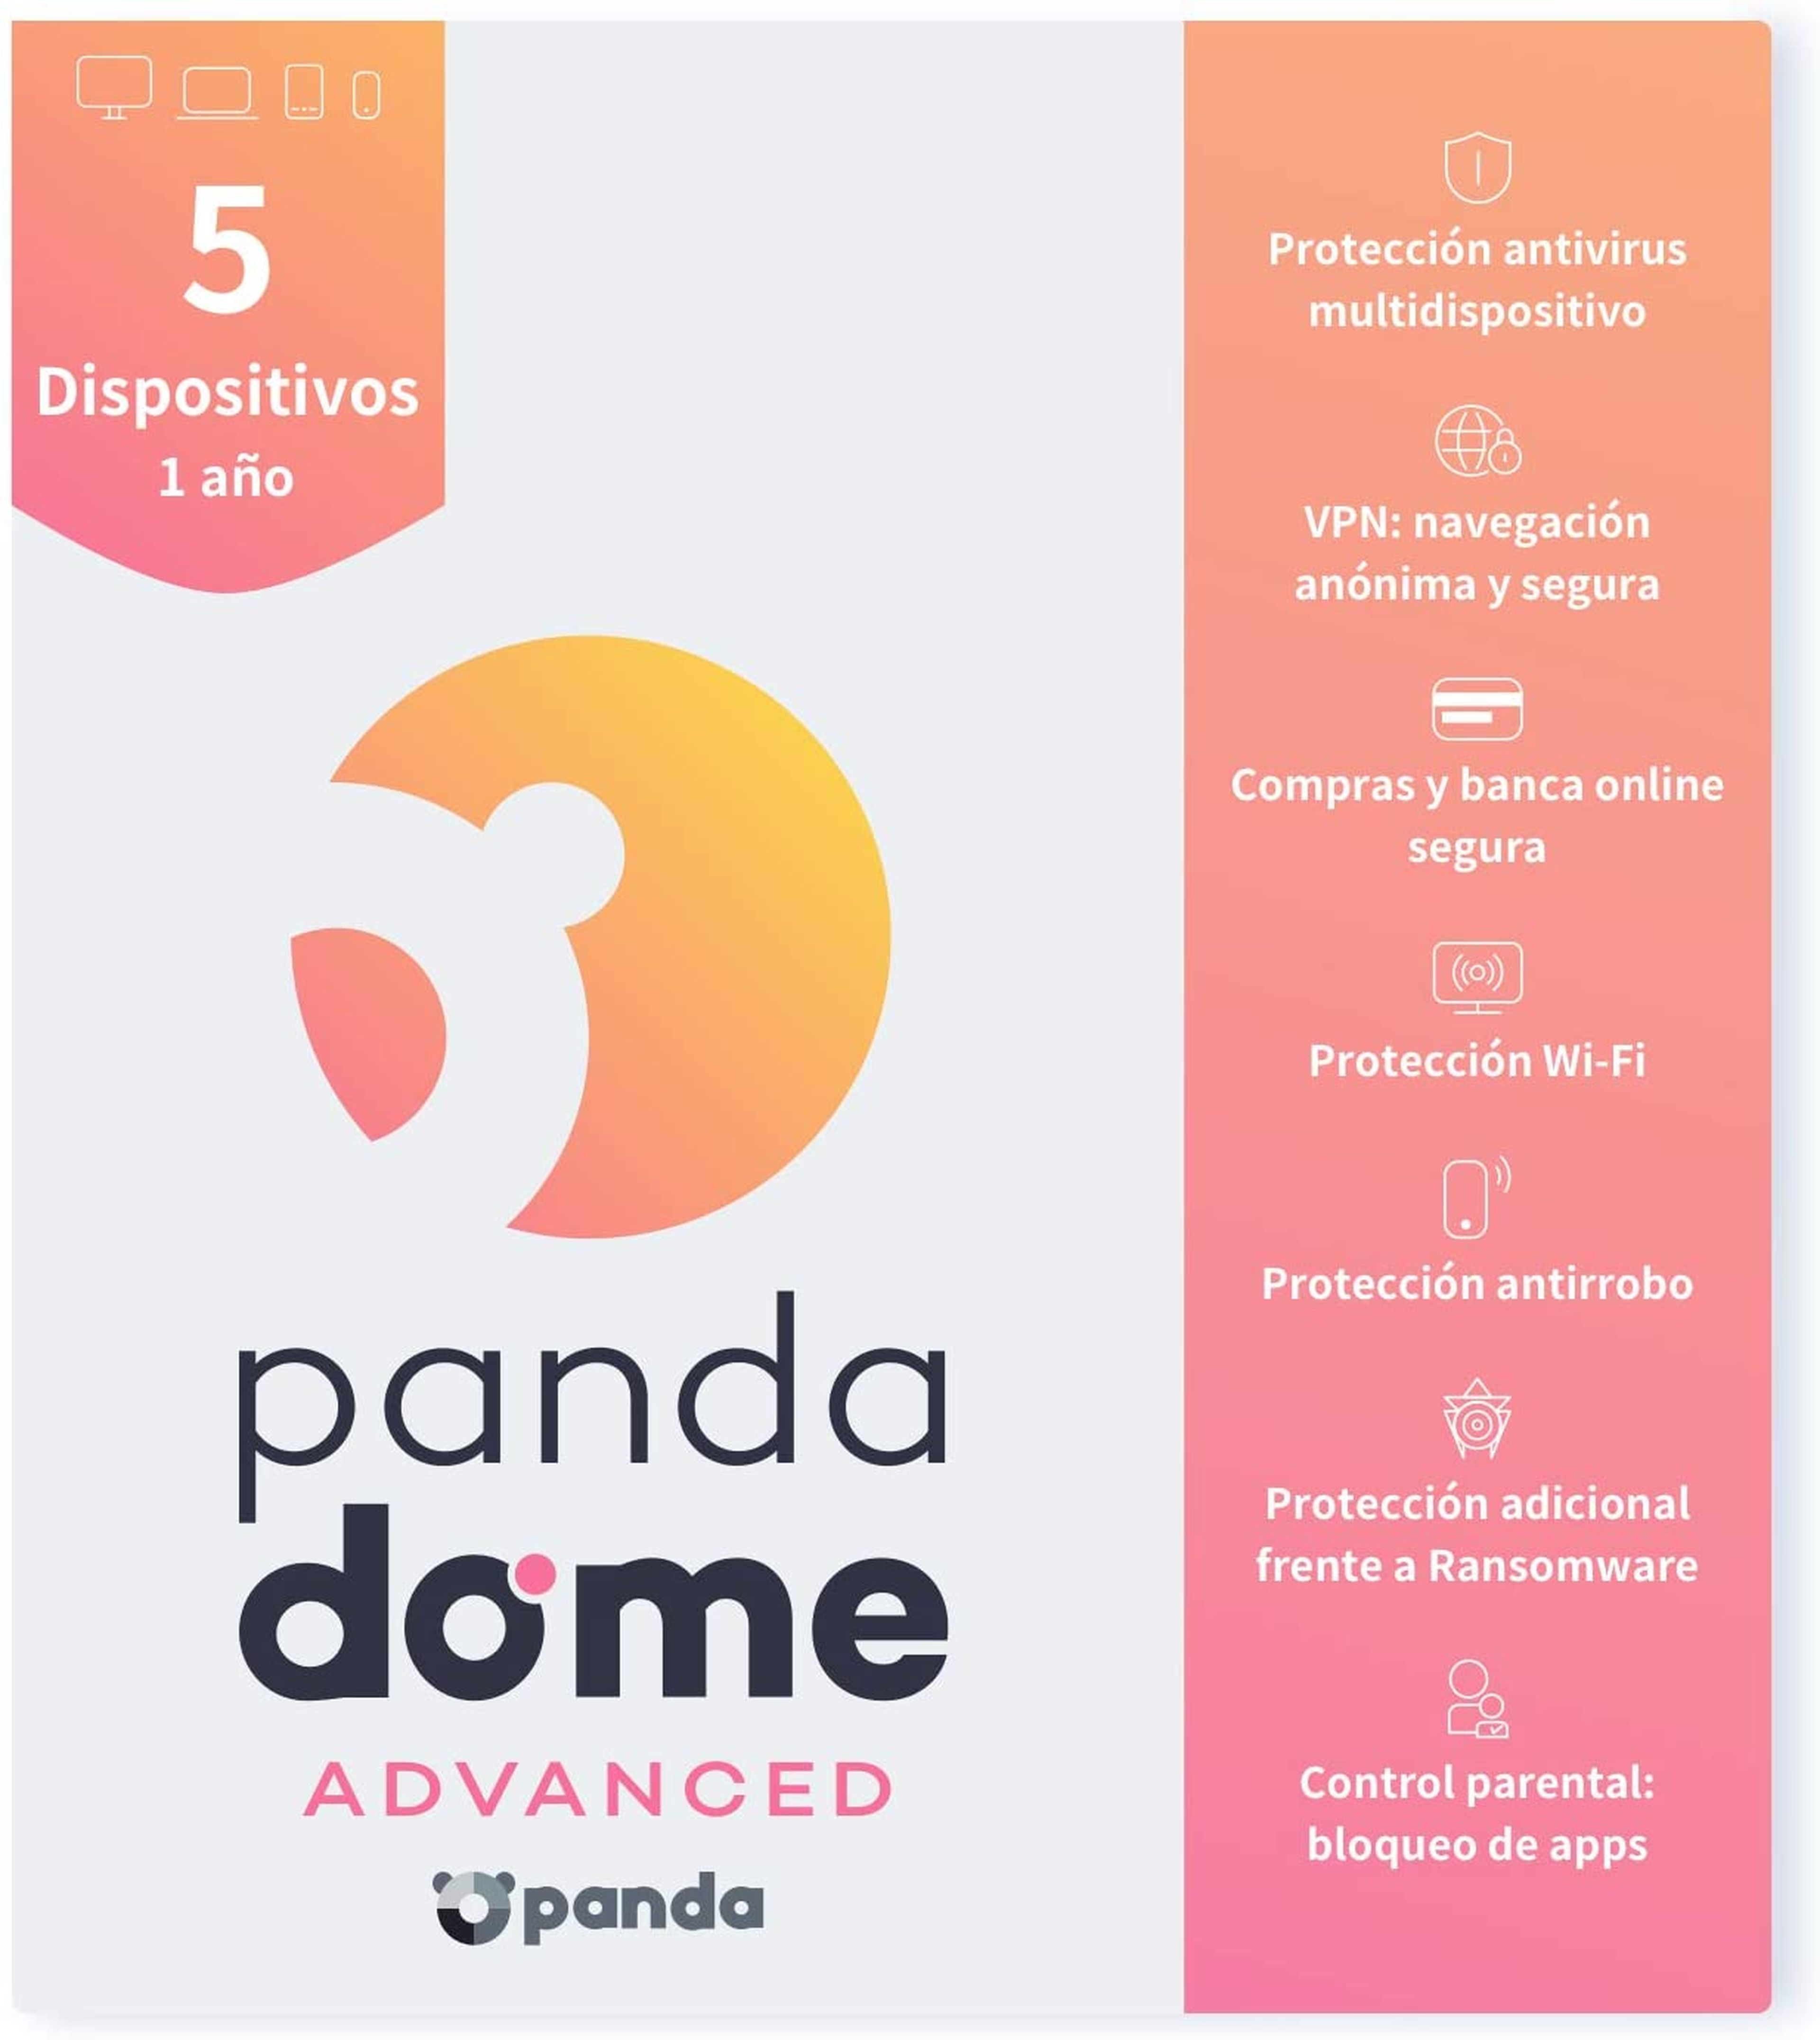 Panda Dome Advanced 2021